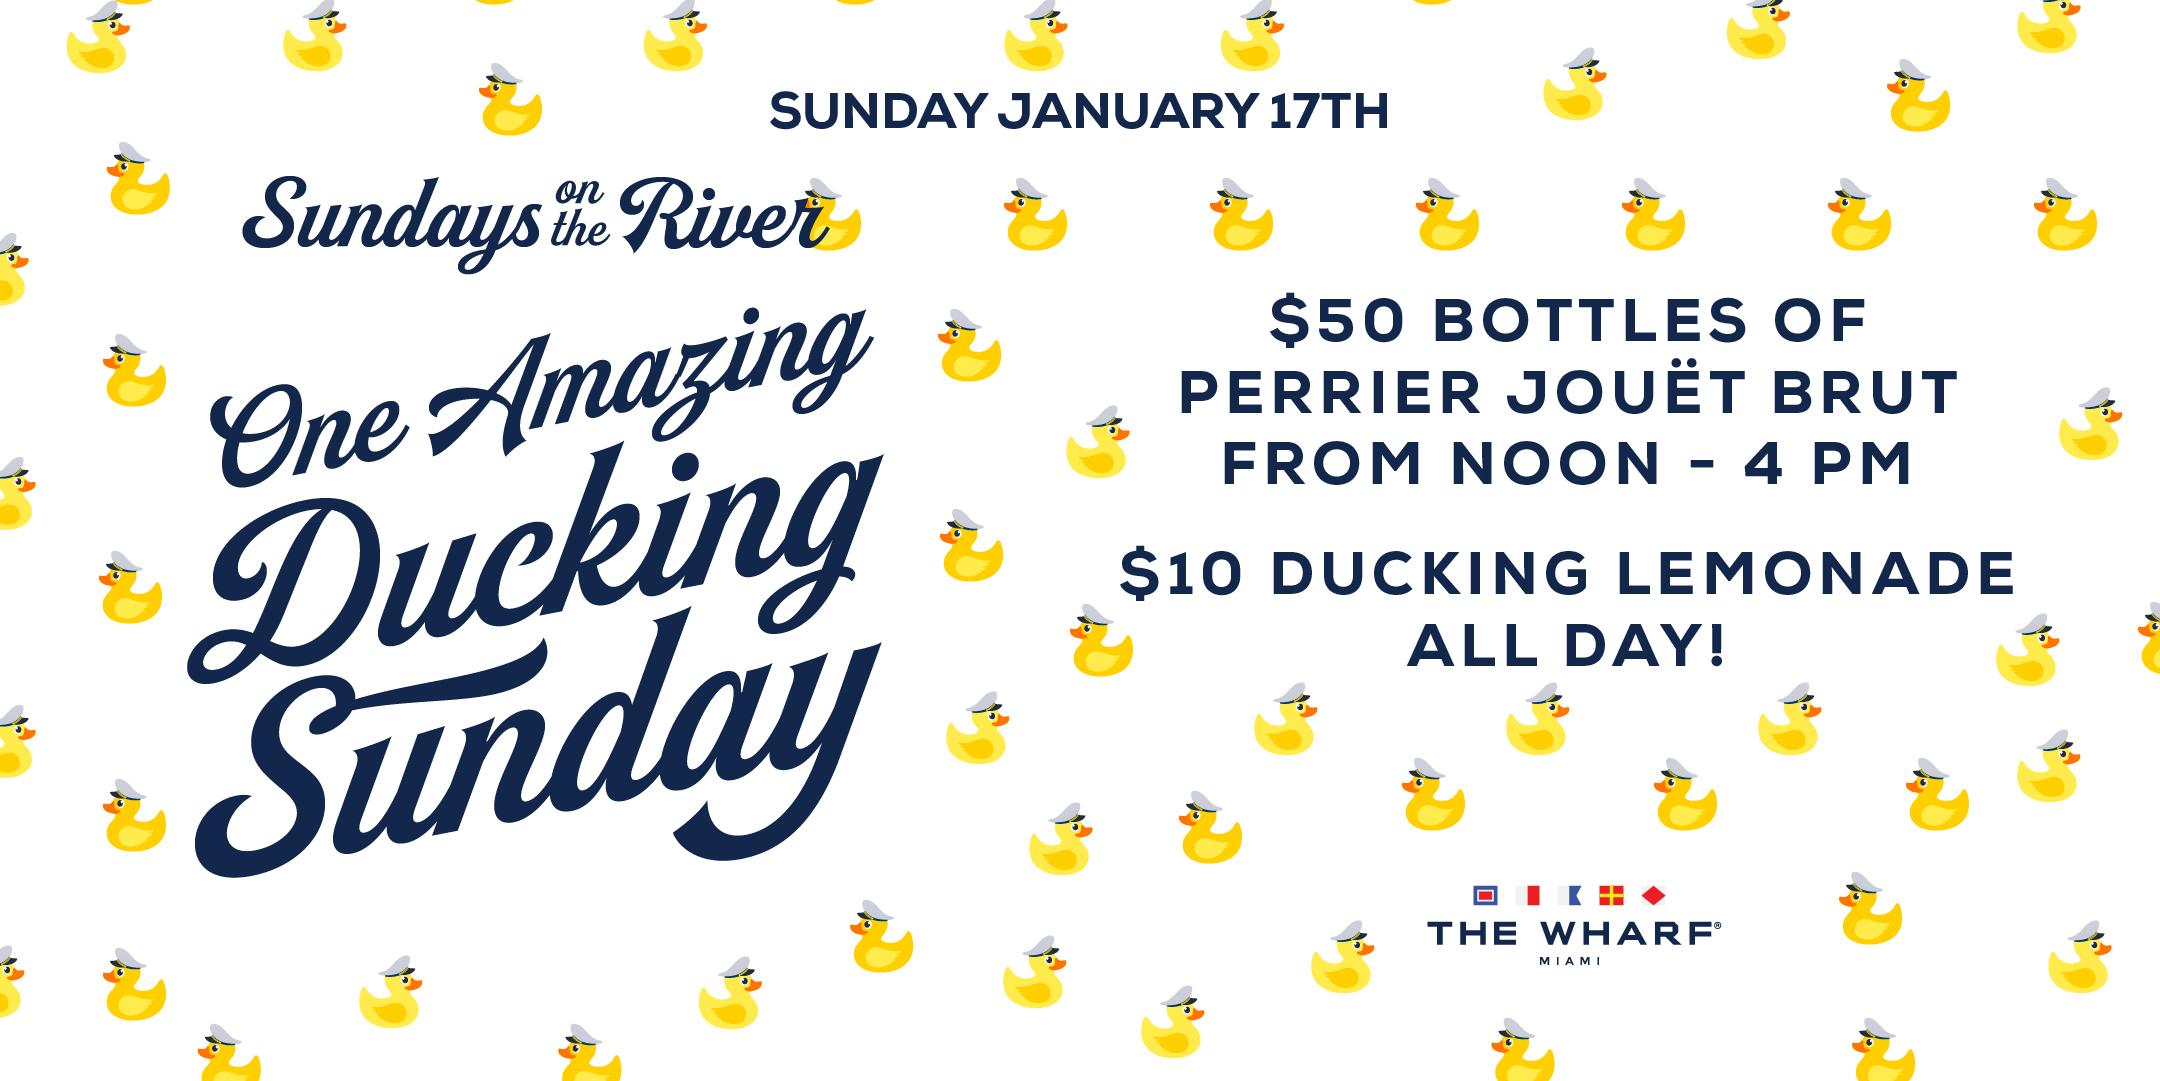 Sundays On The River: One Amazing Ducking Sunday at The Wharf Miami